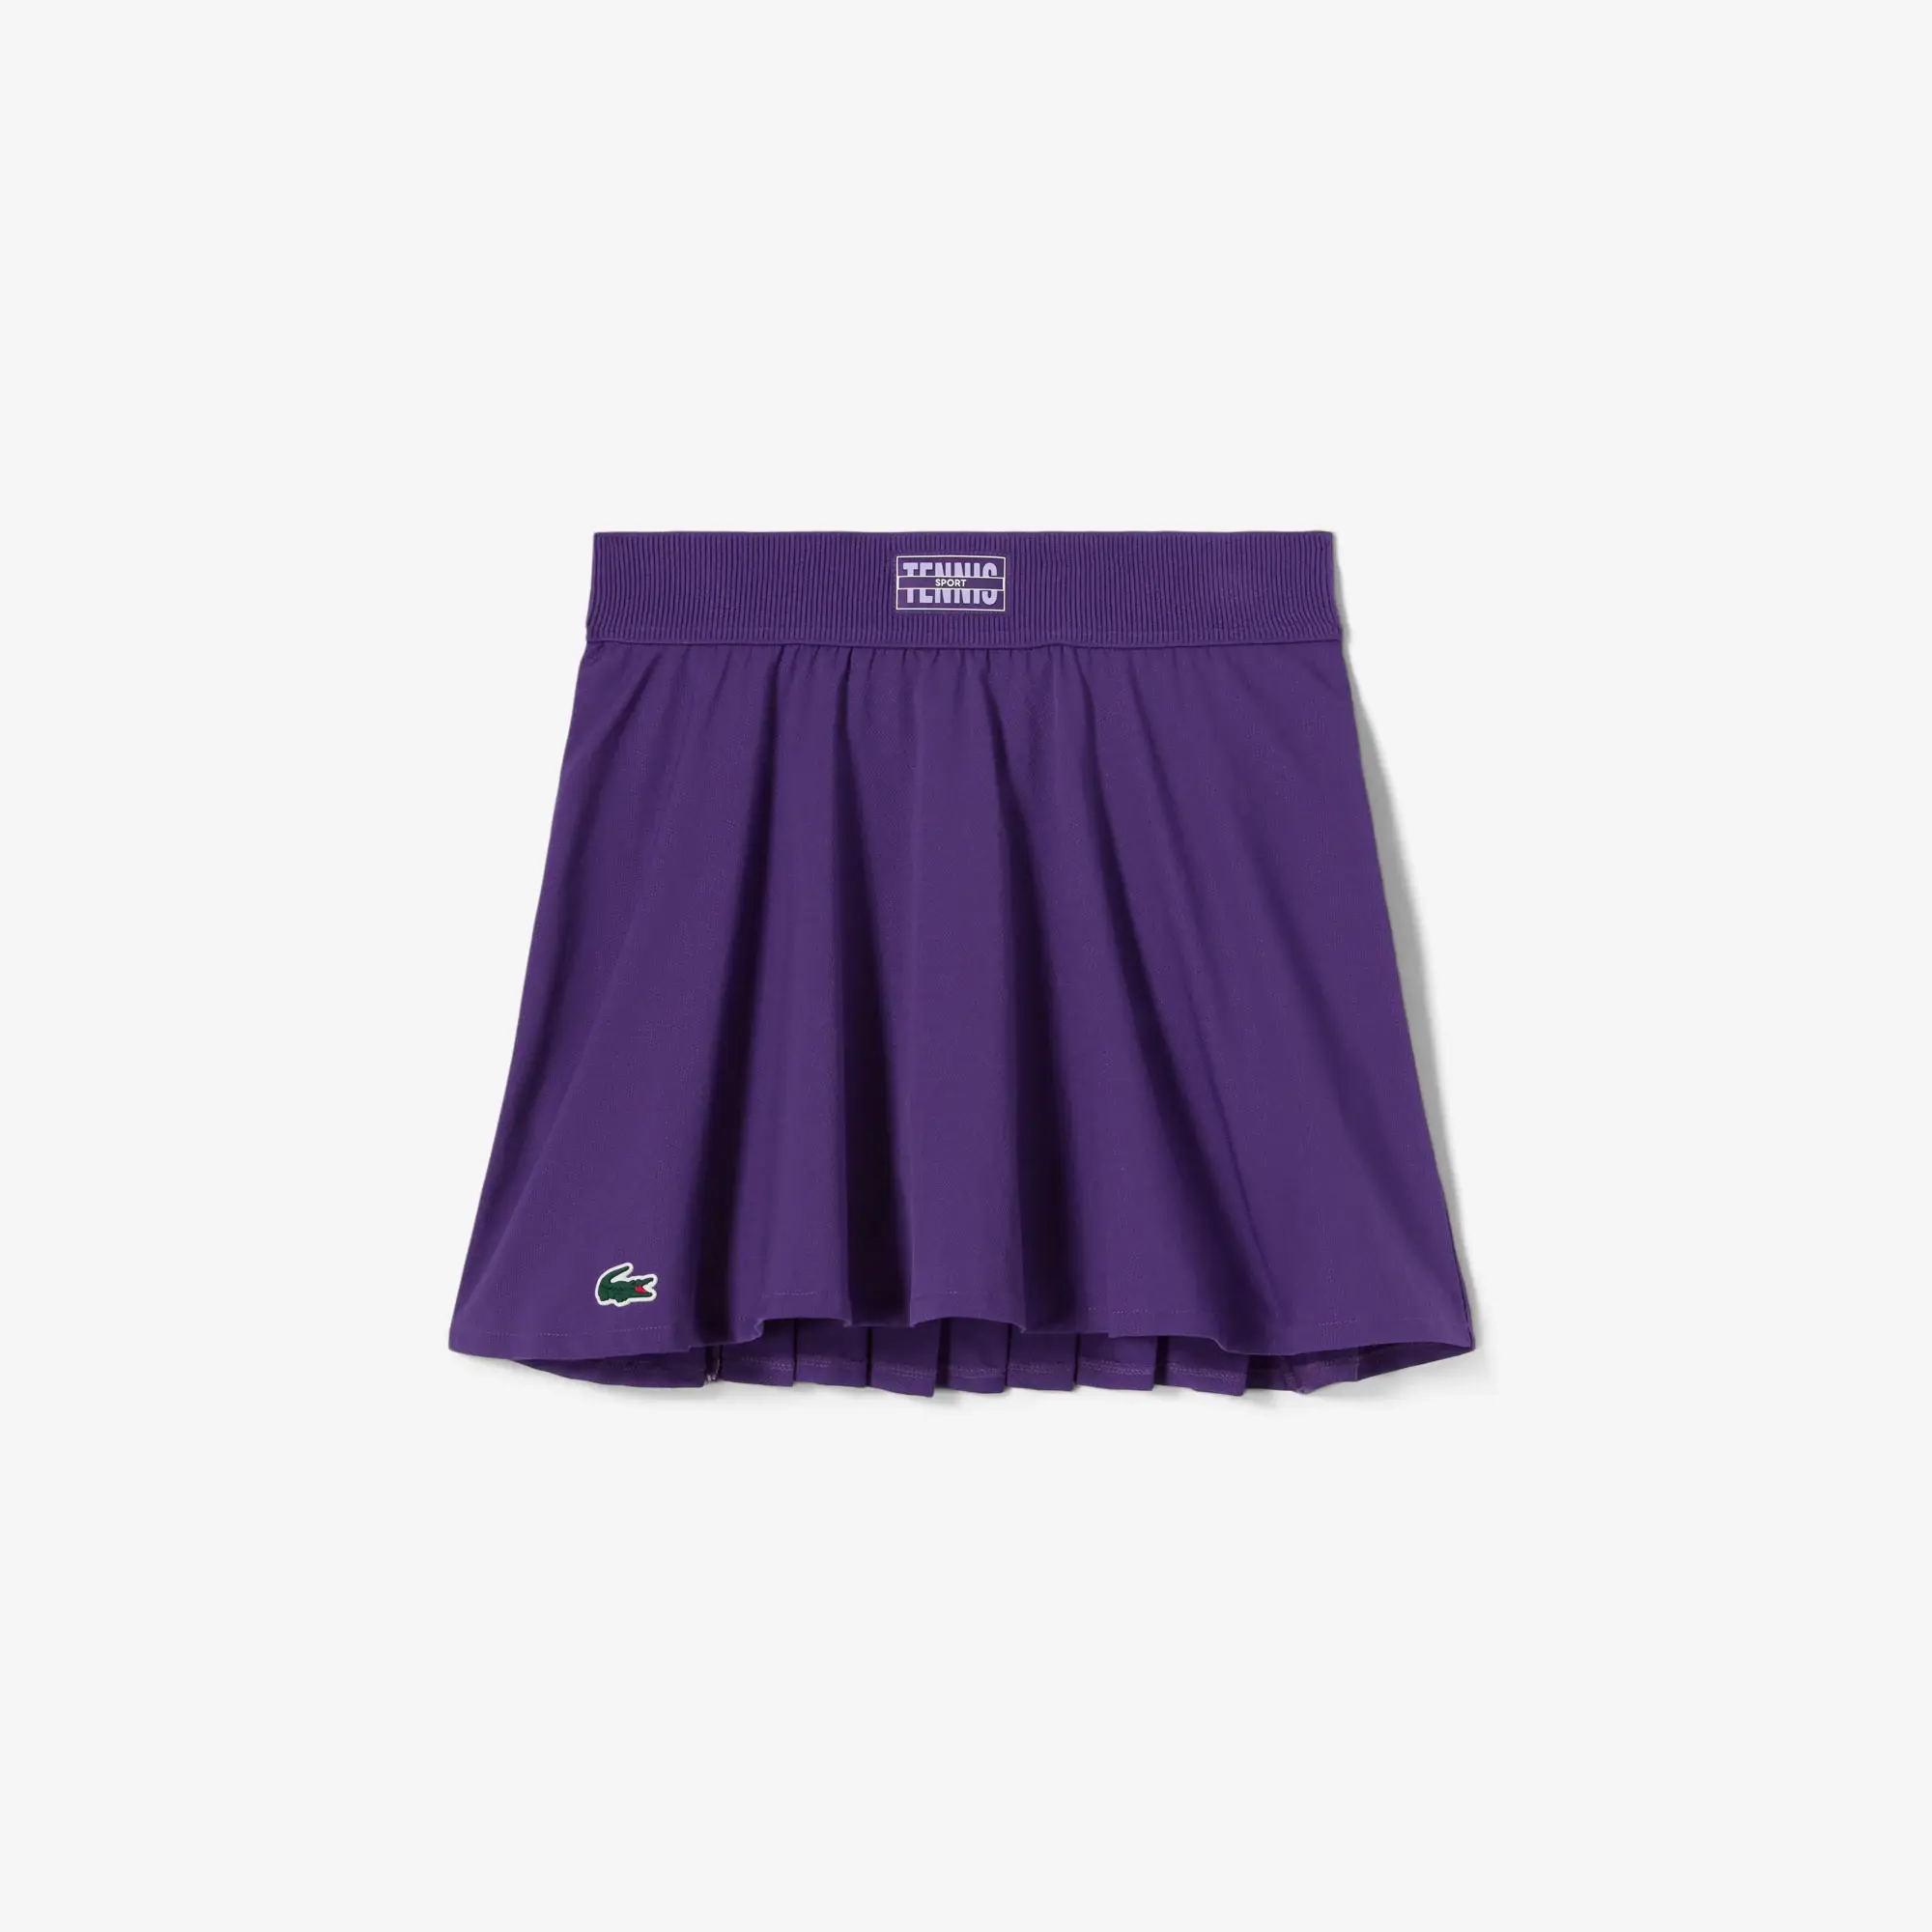 Lacoste Women's Pleated Back Tennis Skirt. 2